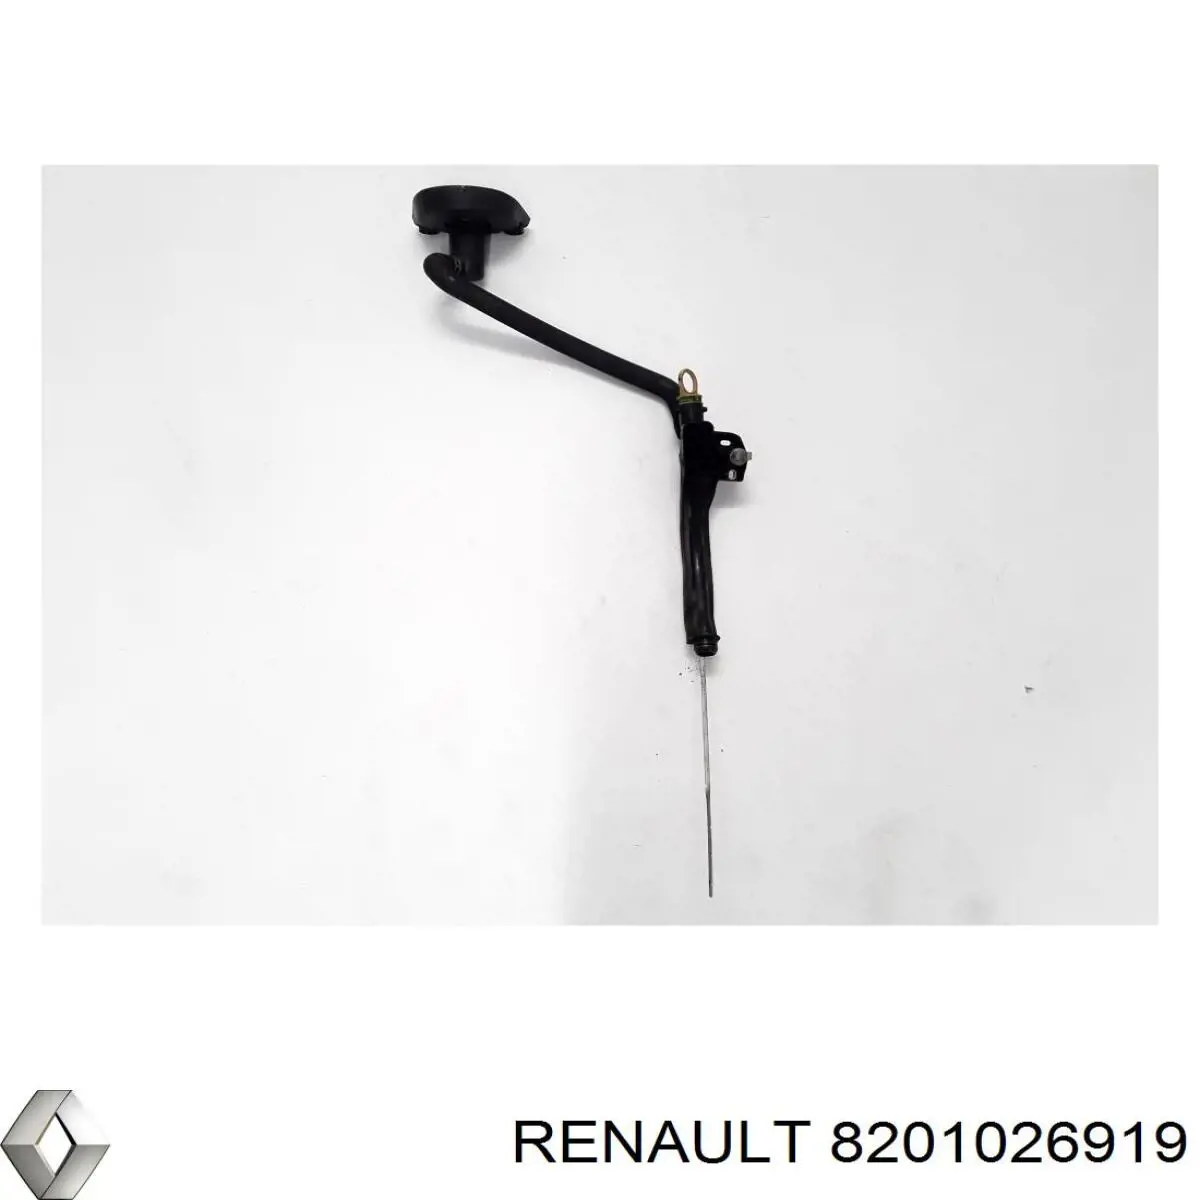 8201026919 Renault (RVI) embudo, varilla del aceite, motor